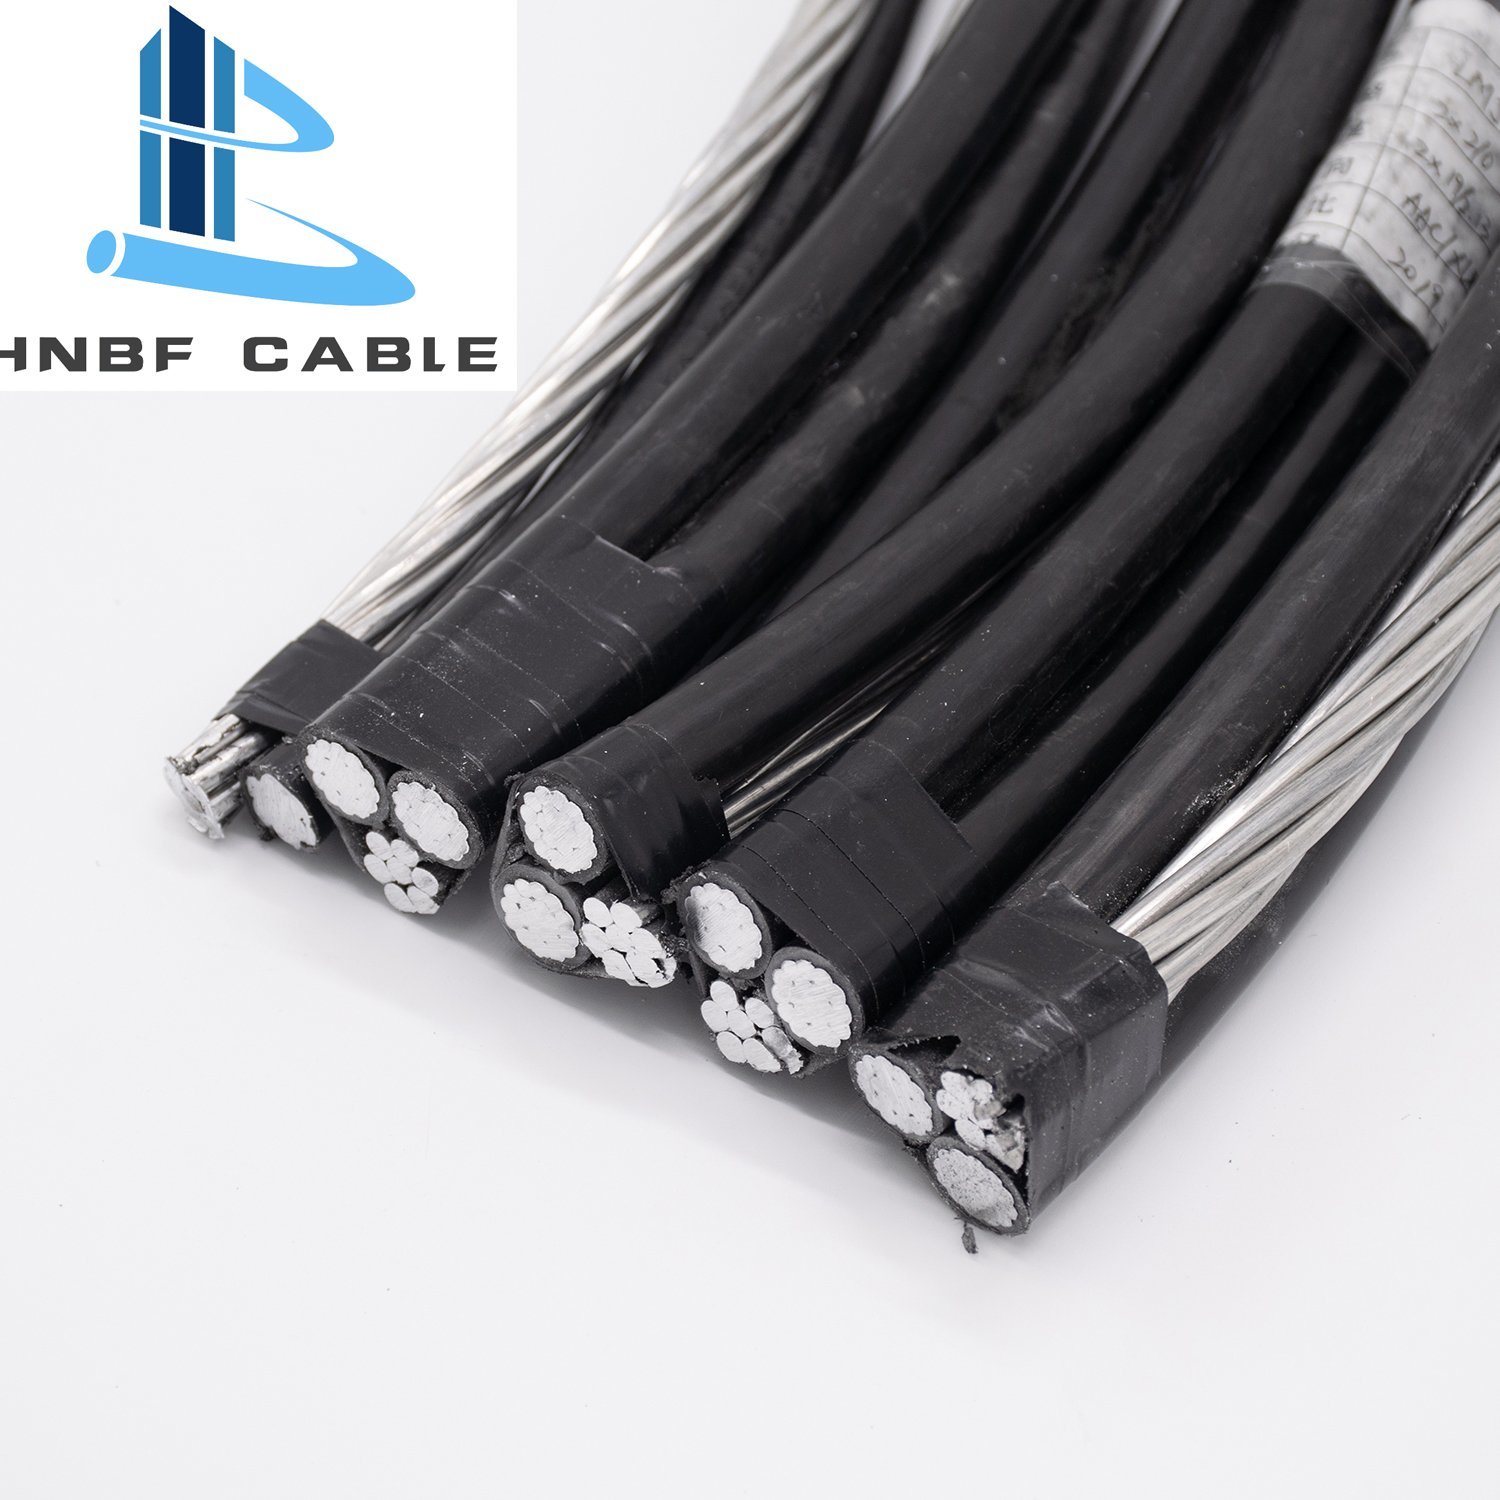 Factory Price Duplex Service Drop Cable ABC Cable 1AWG Labrador